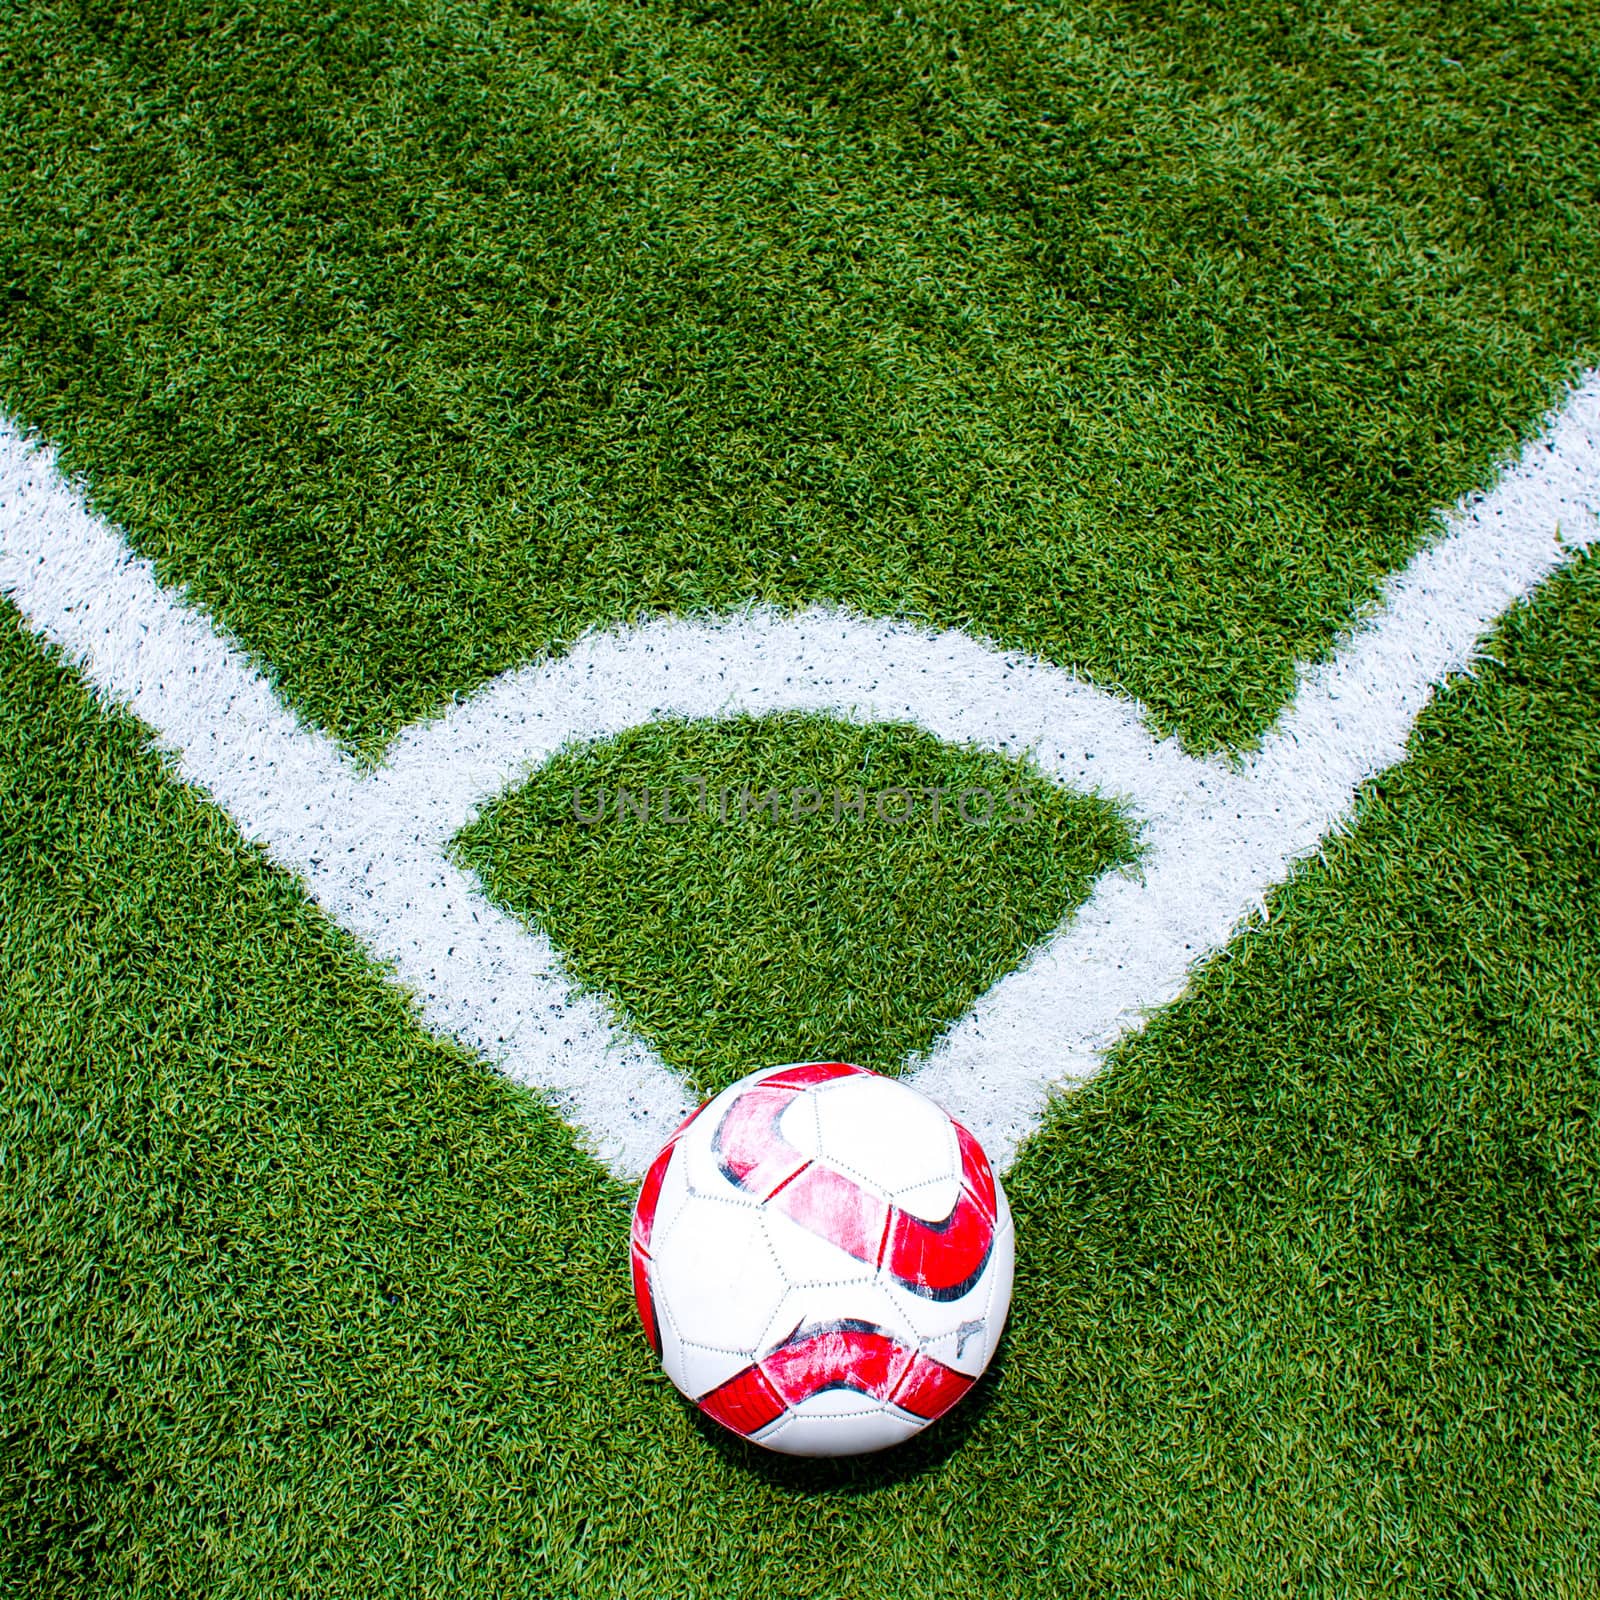 Soccer ball on the field corner